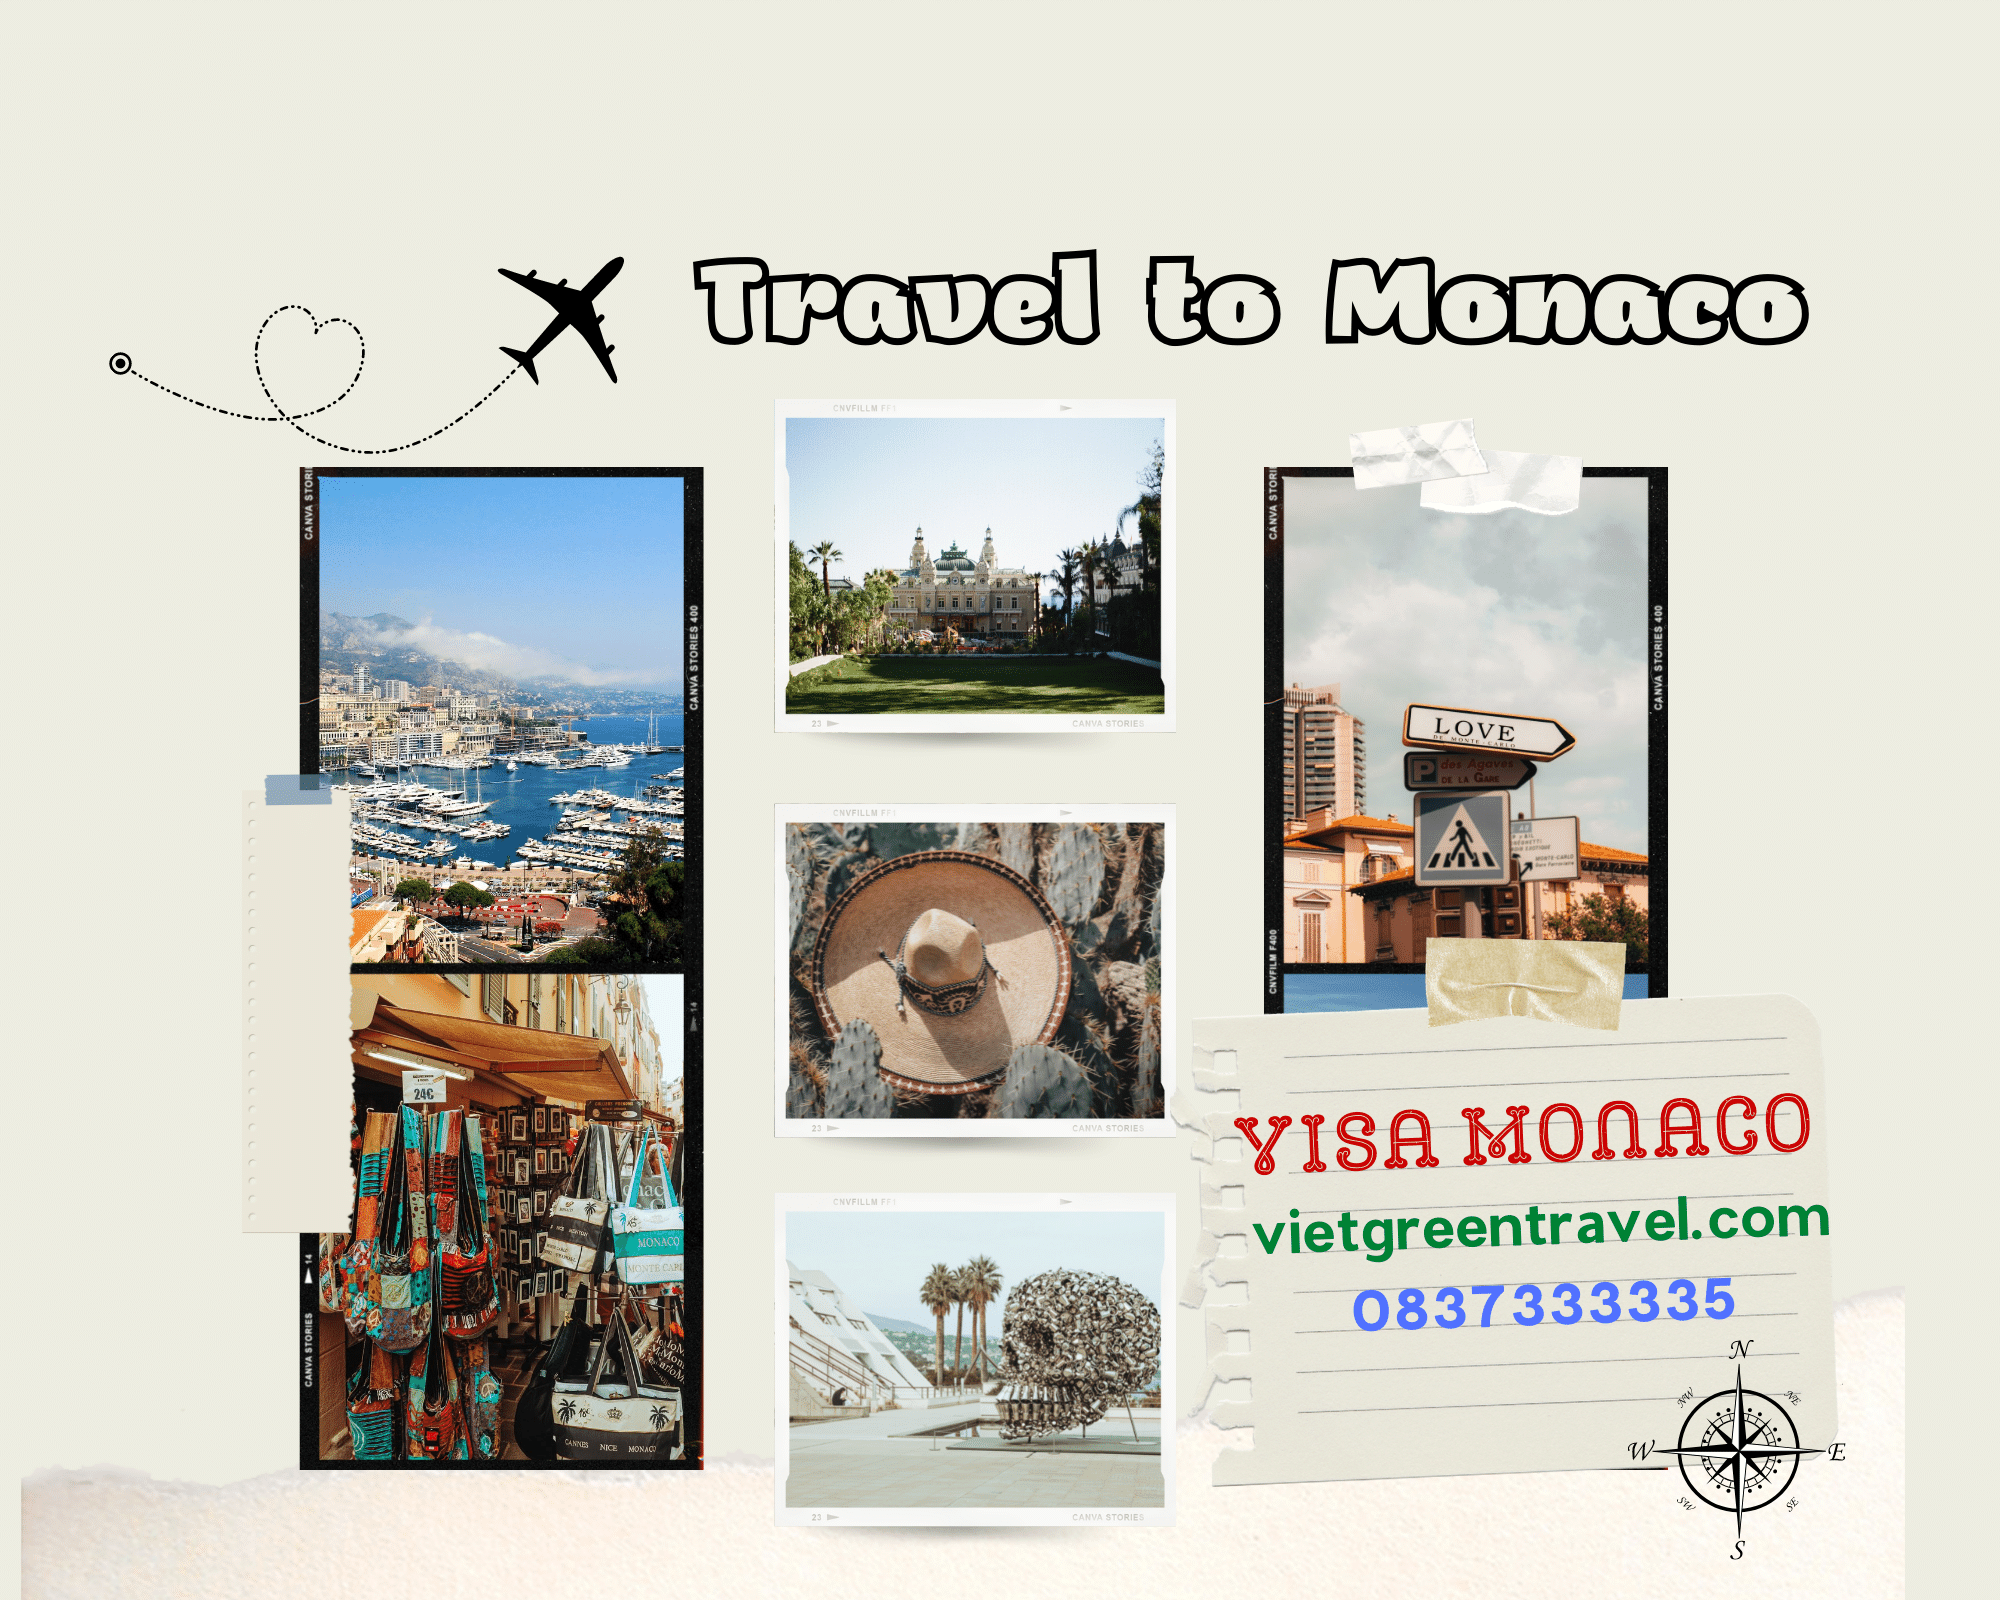 Kinh nghiệm xin visa du lịch Monaco 